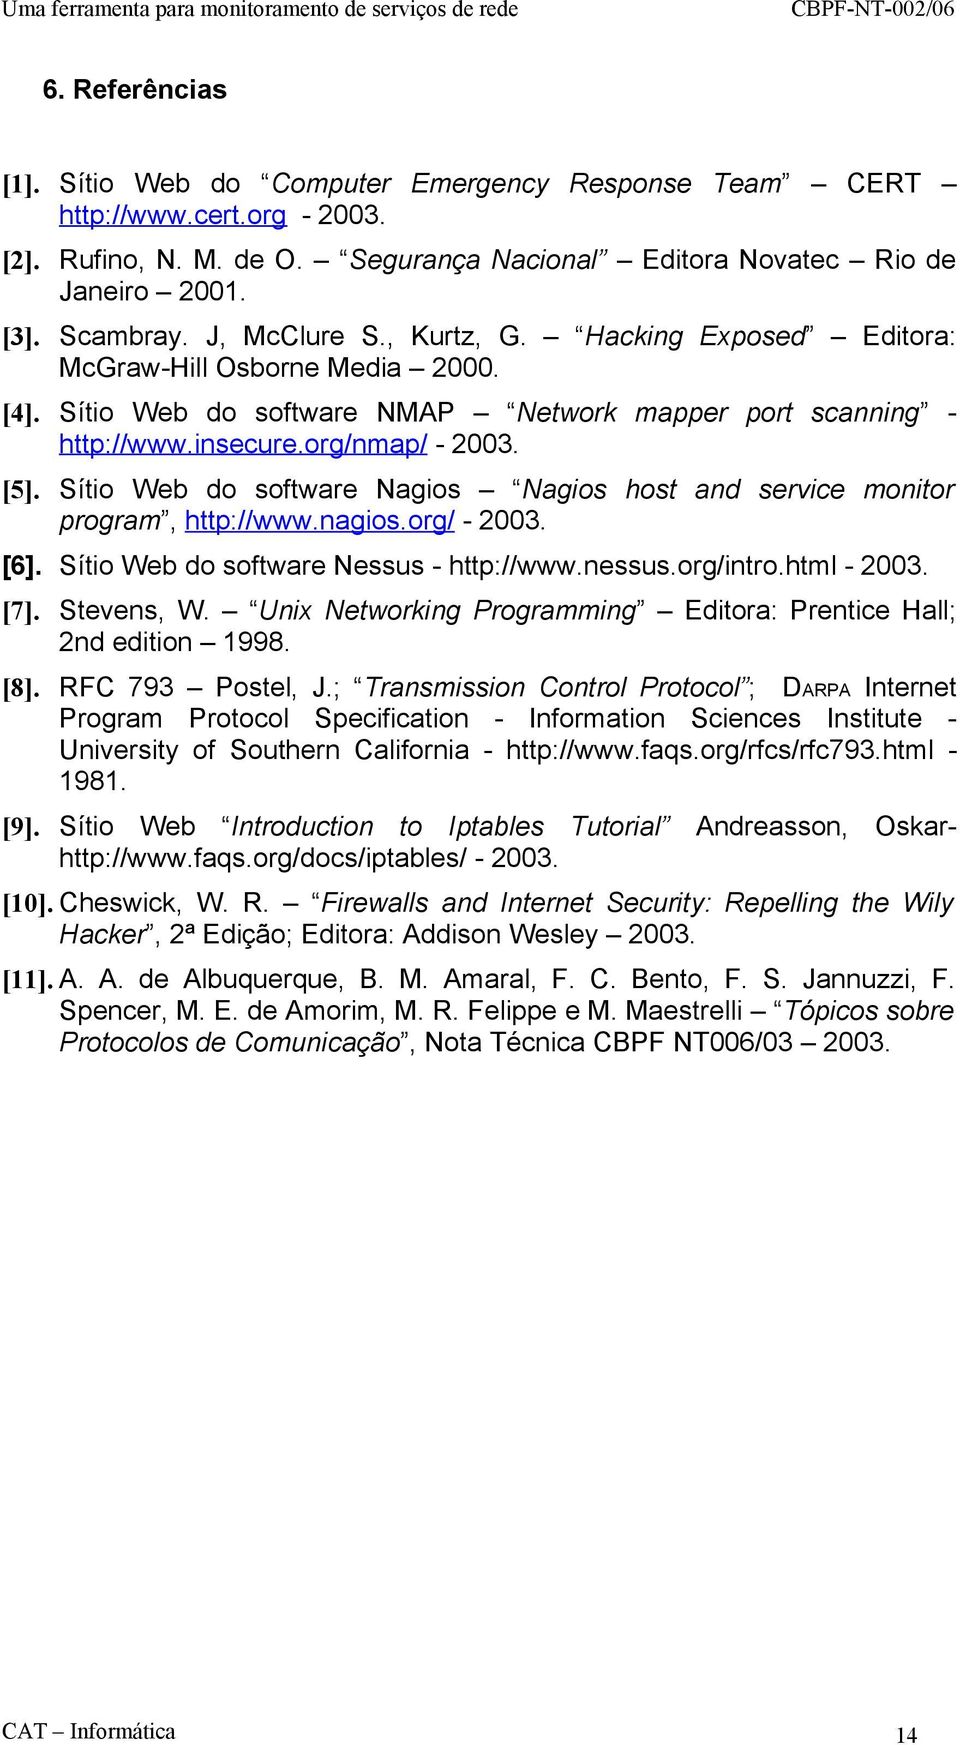 Sítio Web do software Nagios Nagios host and service monitor program, http://www.nagios.org/ - 2003. [6]. Sítio Web do software Nessus - http://www.nessus.org/intro.html - 2003. [7]. Stevens, W.